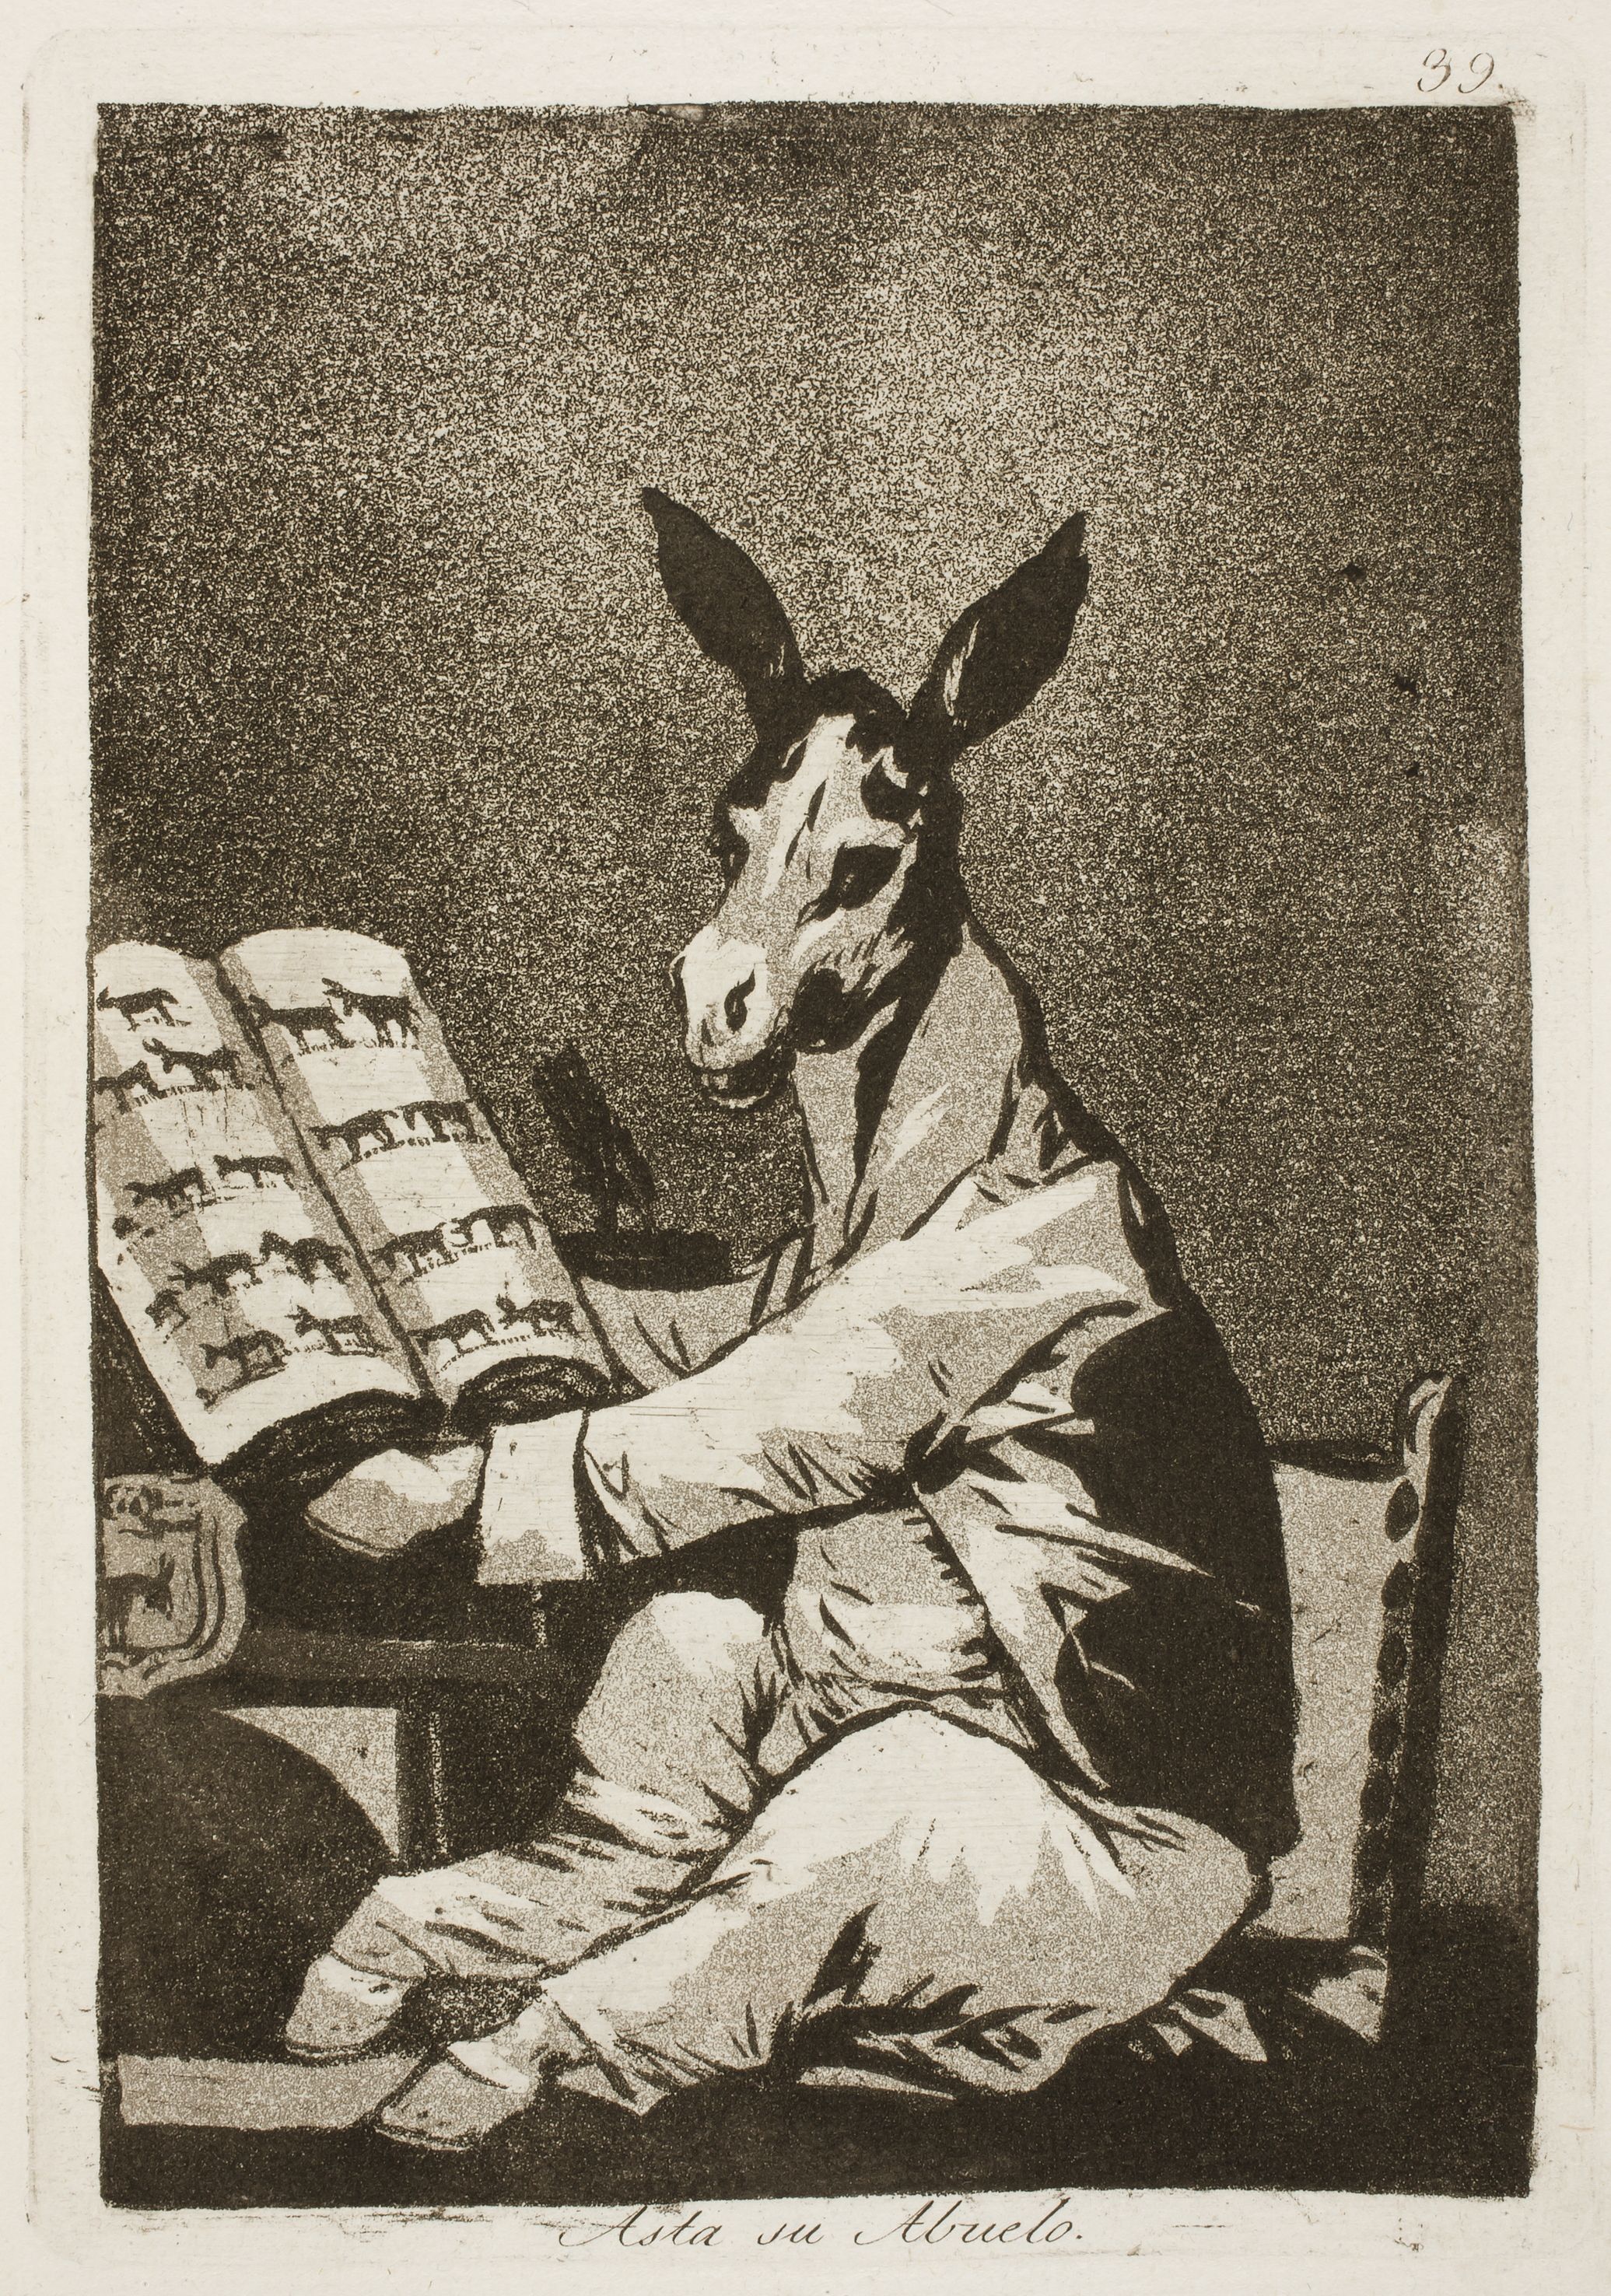 Asta su abuelo by Francisco Goya - 1798 - 21.8 x 15.4 cm Kunsthalle de Hambourg